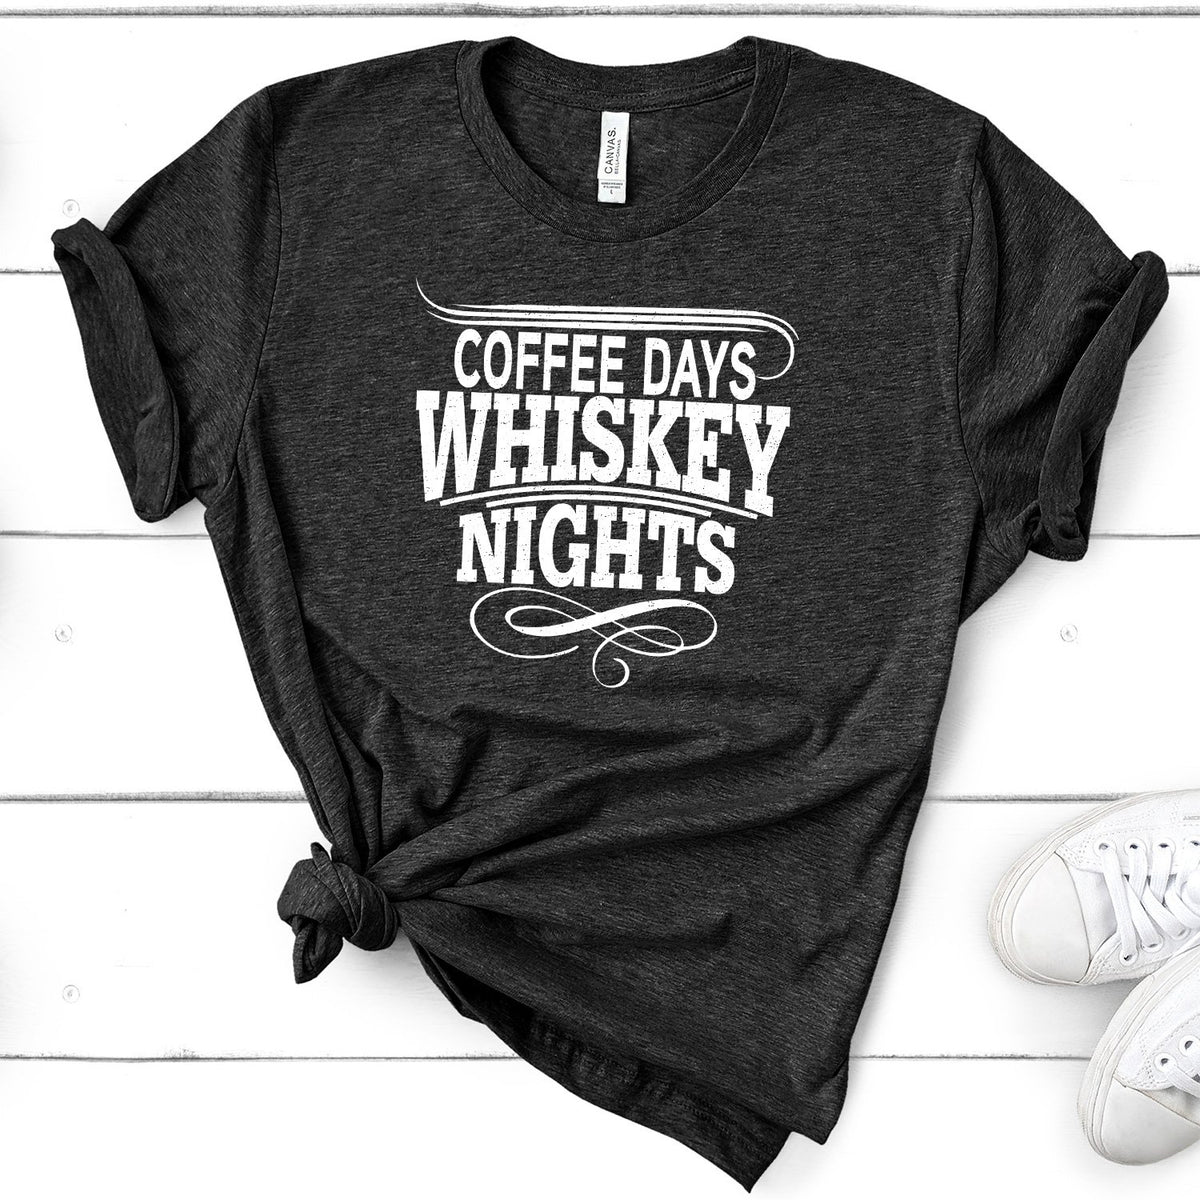 Coffee Days Whiskey Nights - Short Sleeve Tee Shirt